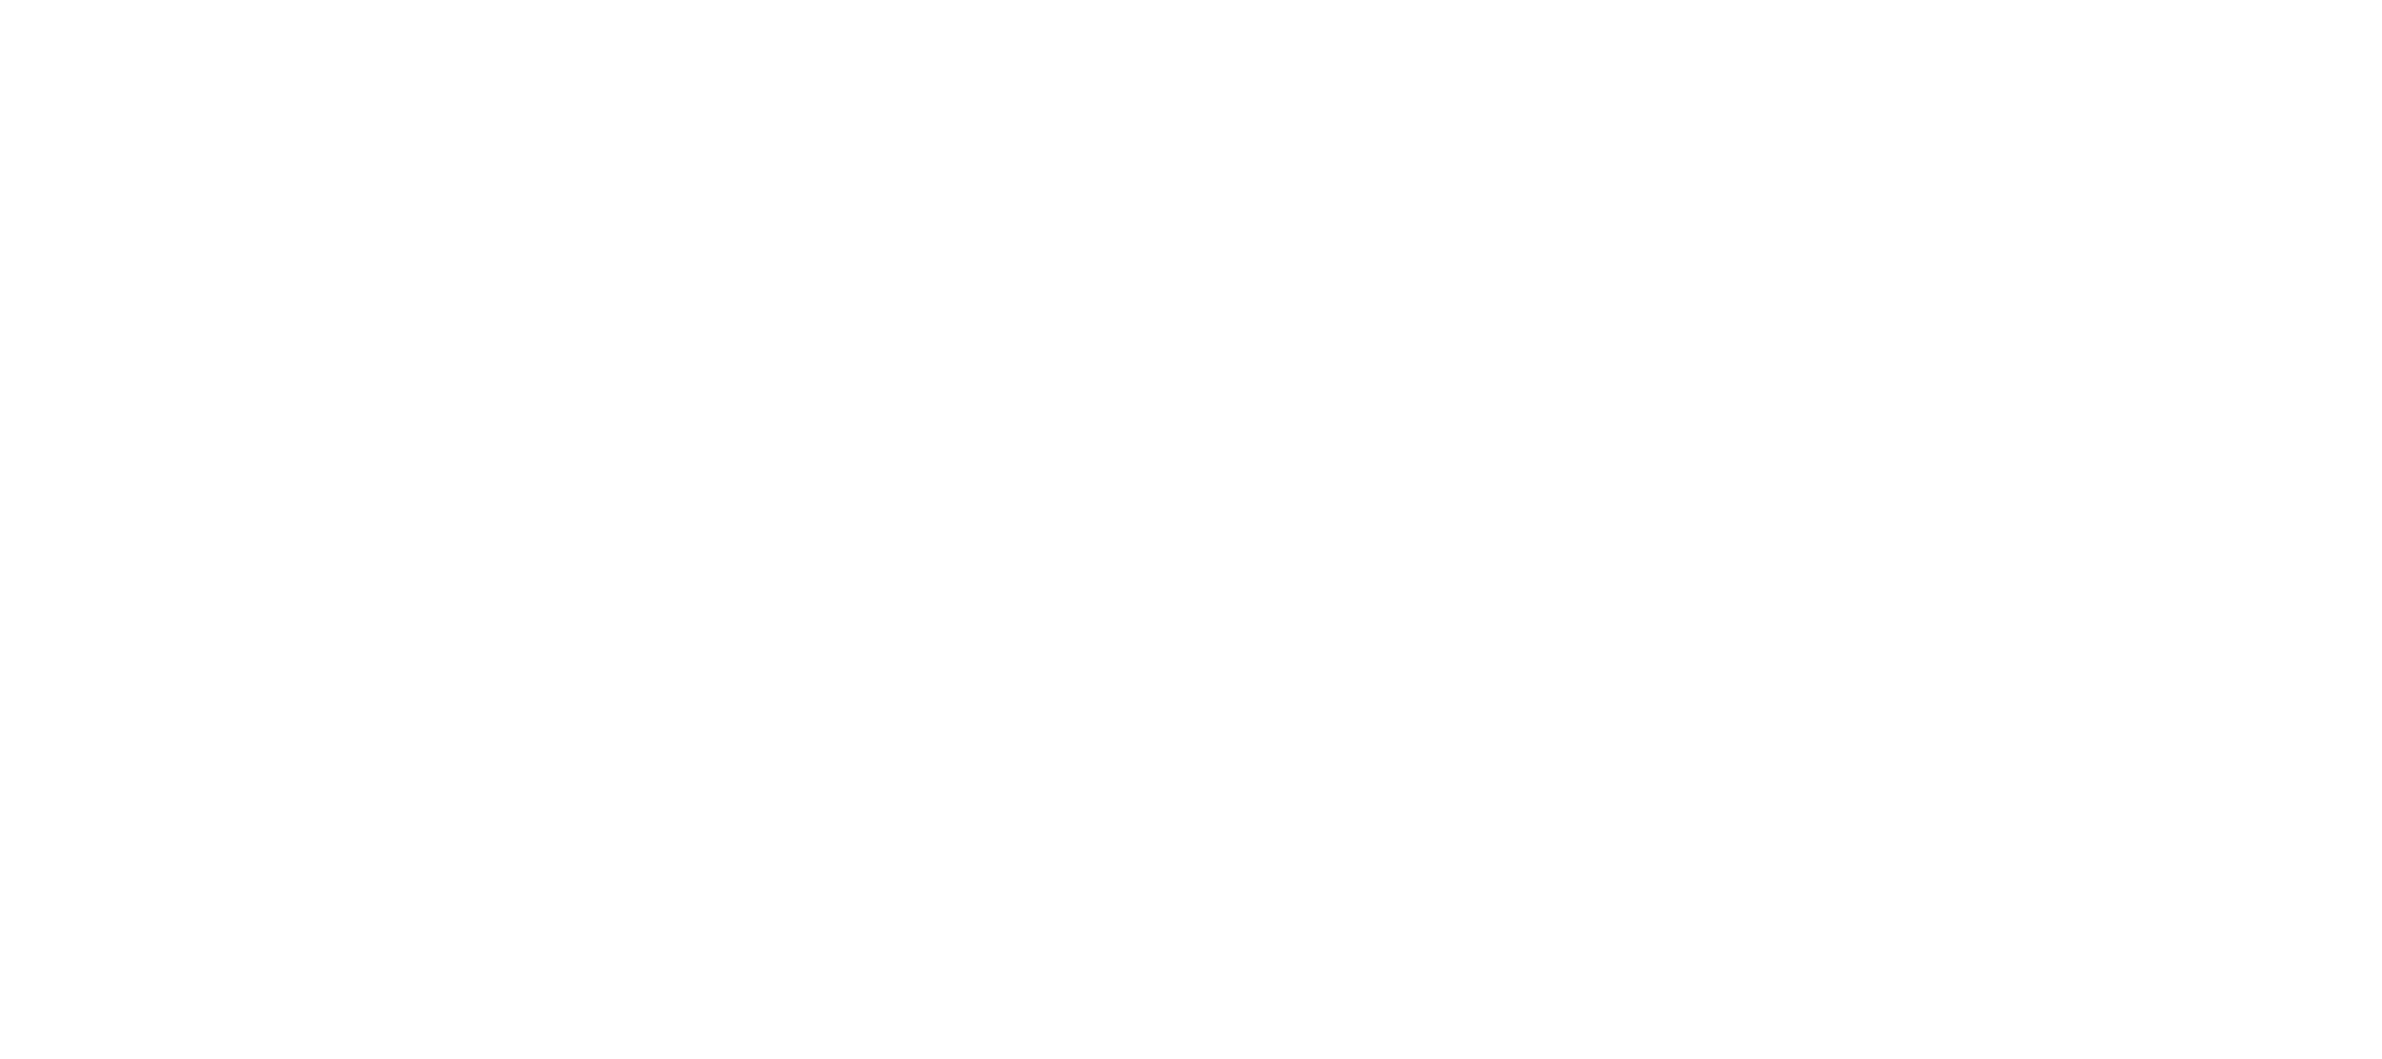 Washington State Department of Commerce Logo